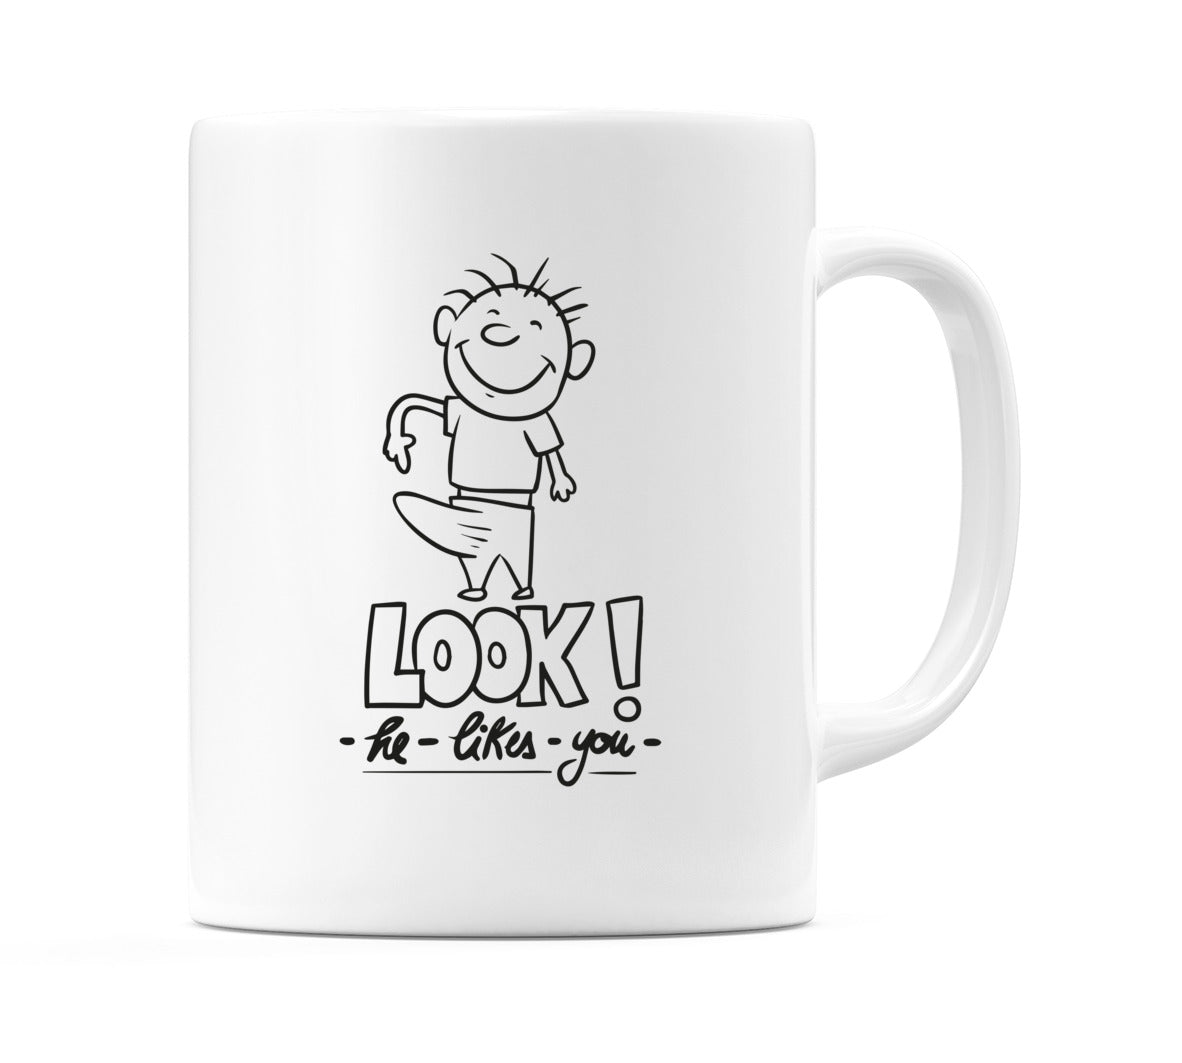 LOOK! - he - likes - you - Mug